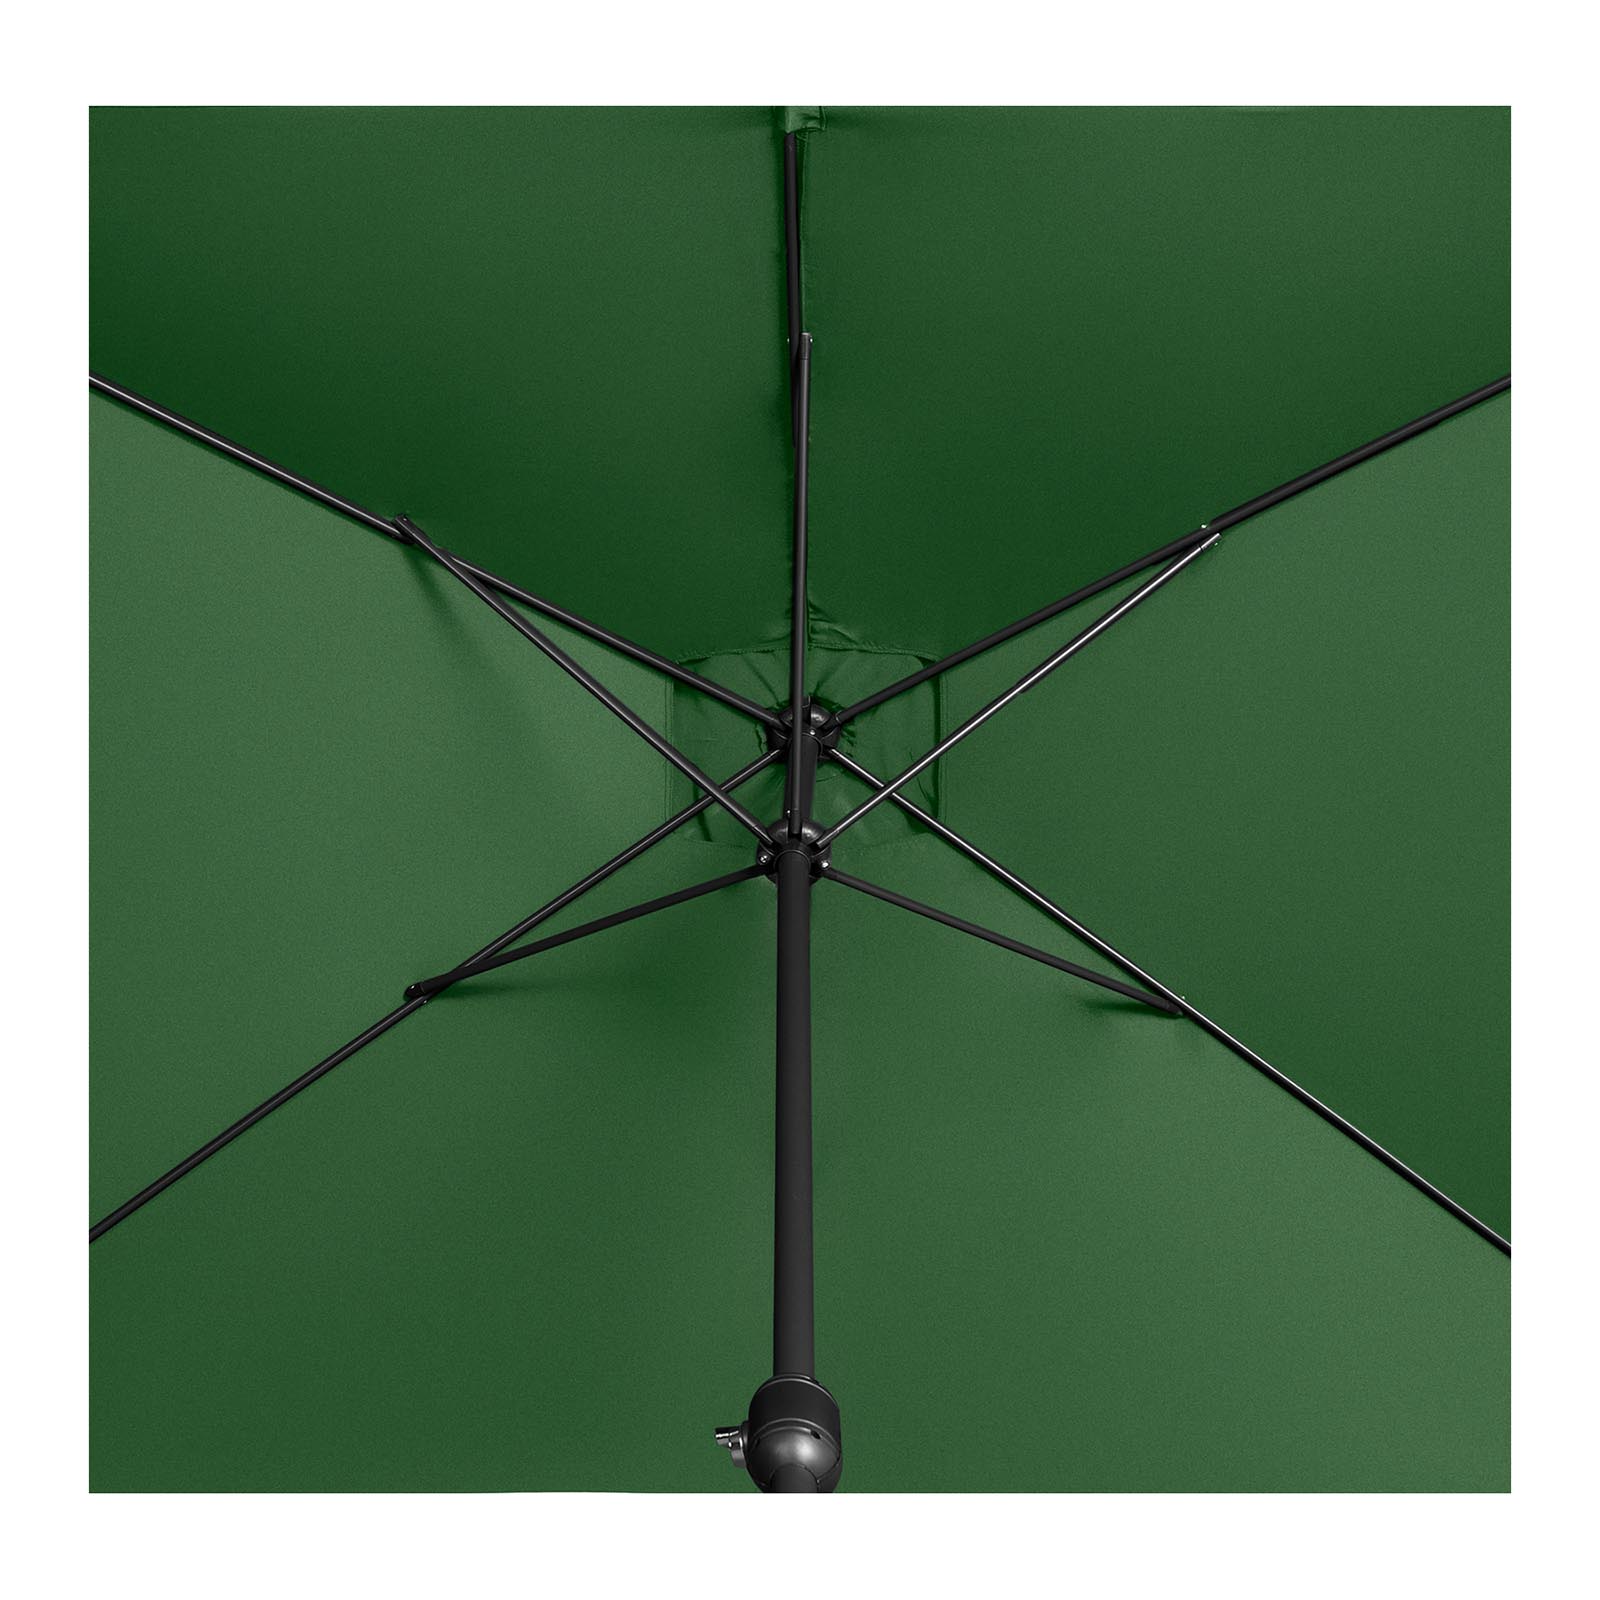 Aurinkovarjo suuri - vihreä - suorakulmainen - 200 x 300 cm